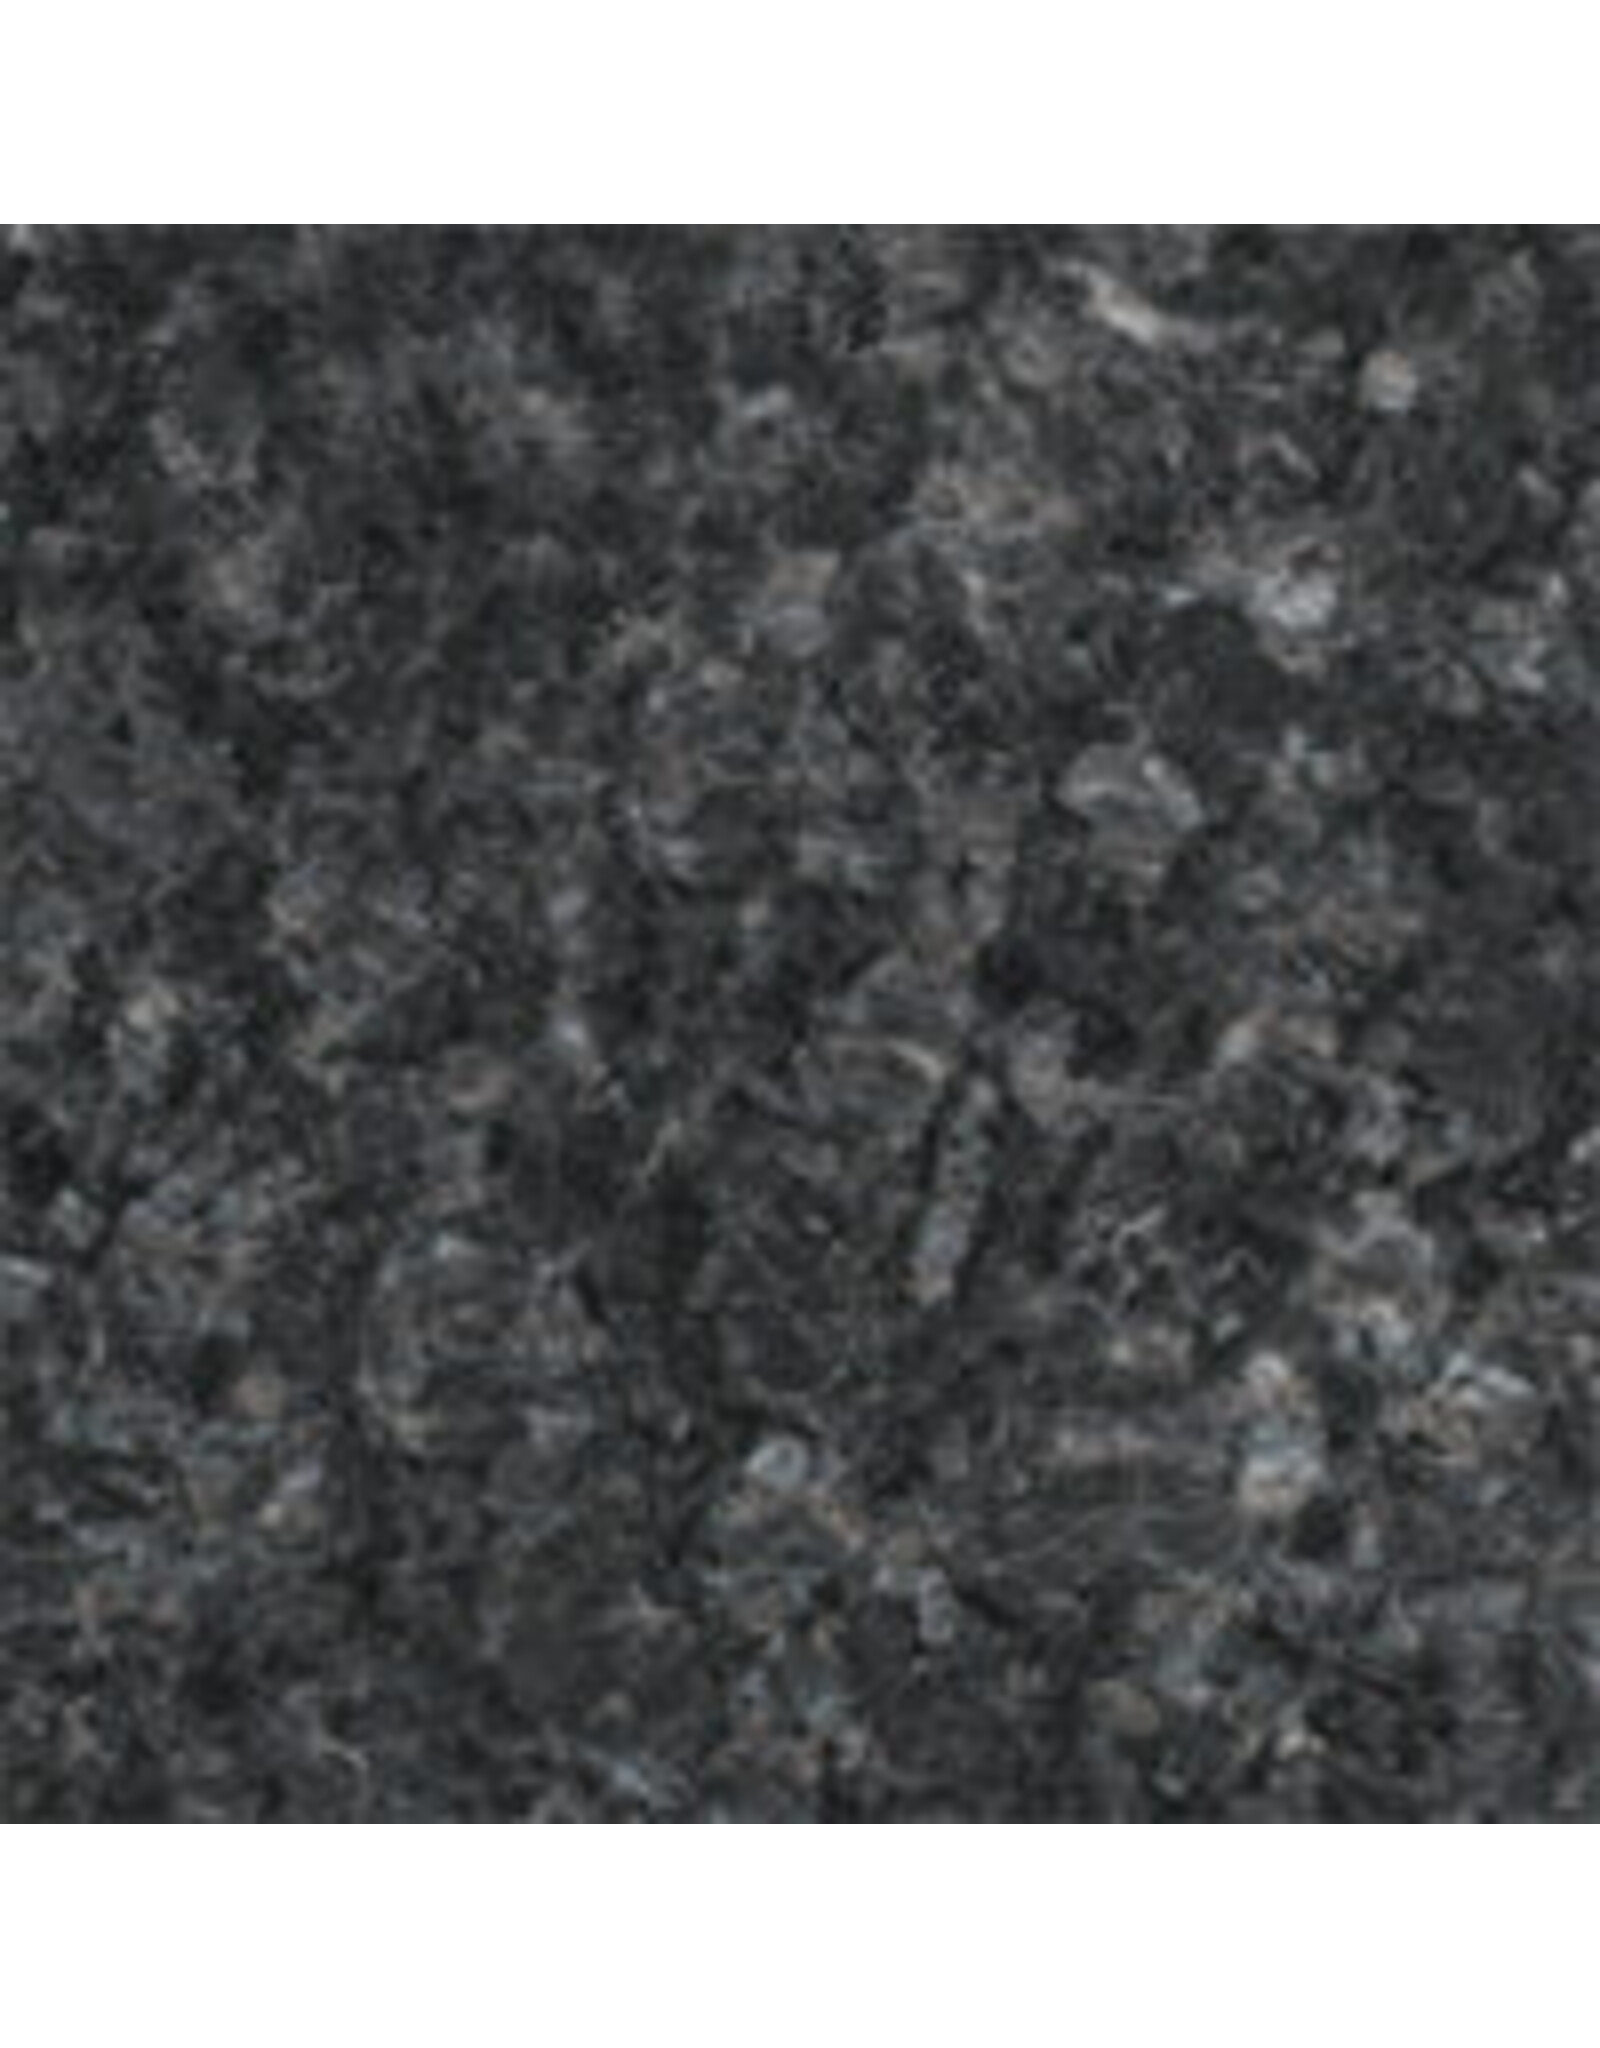 HKC Laminate Countertop 6280-58 Midnight Stone 25.25x120 Left Miter (10ft)